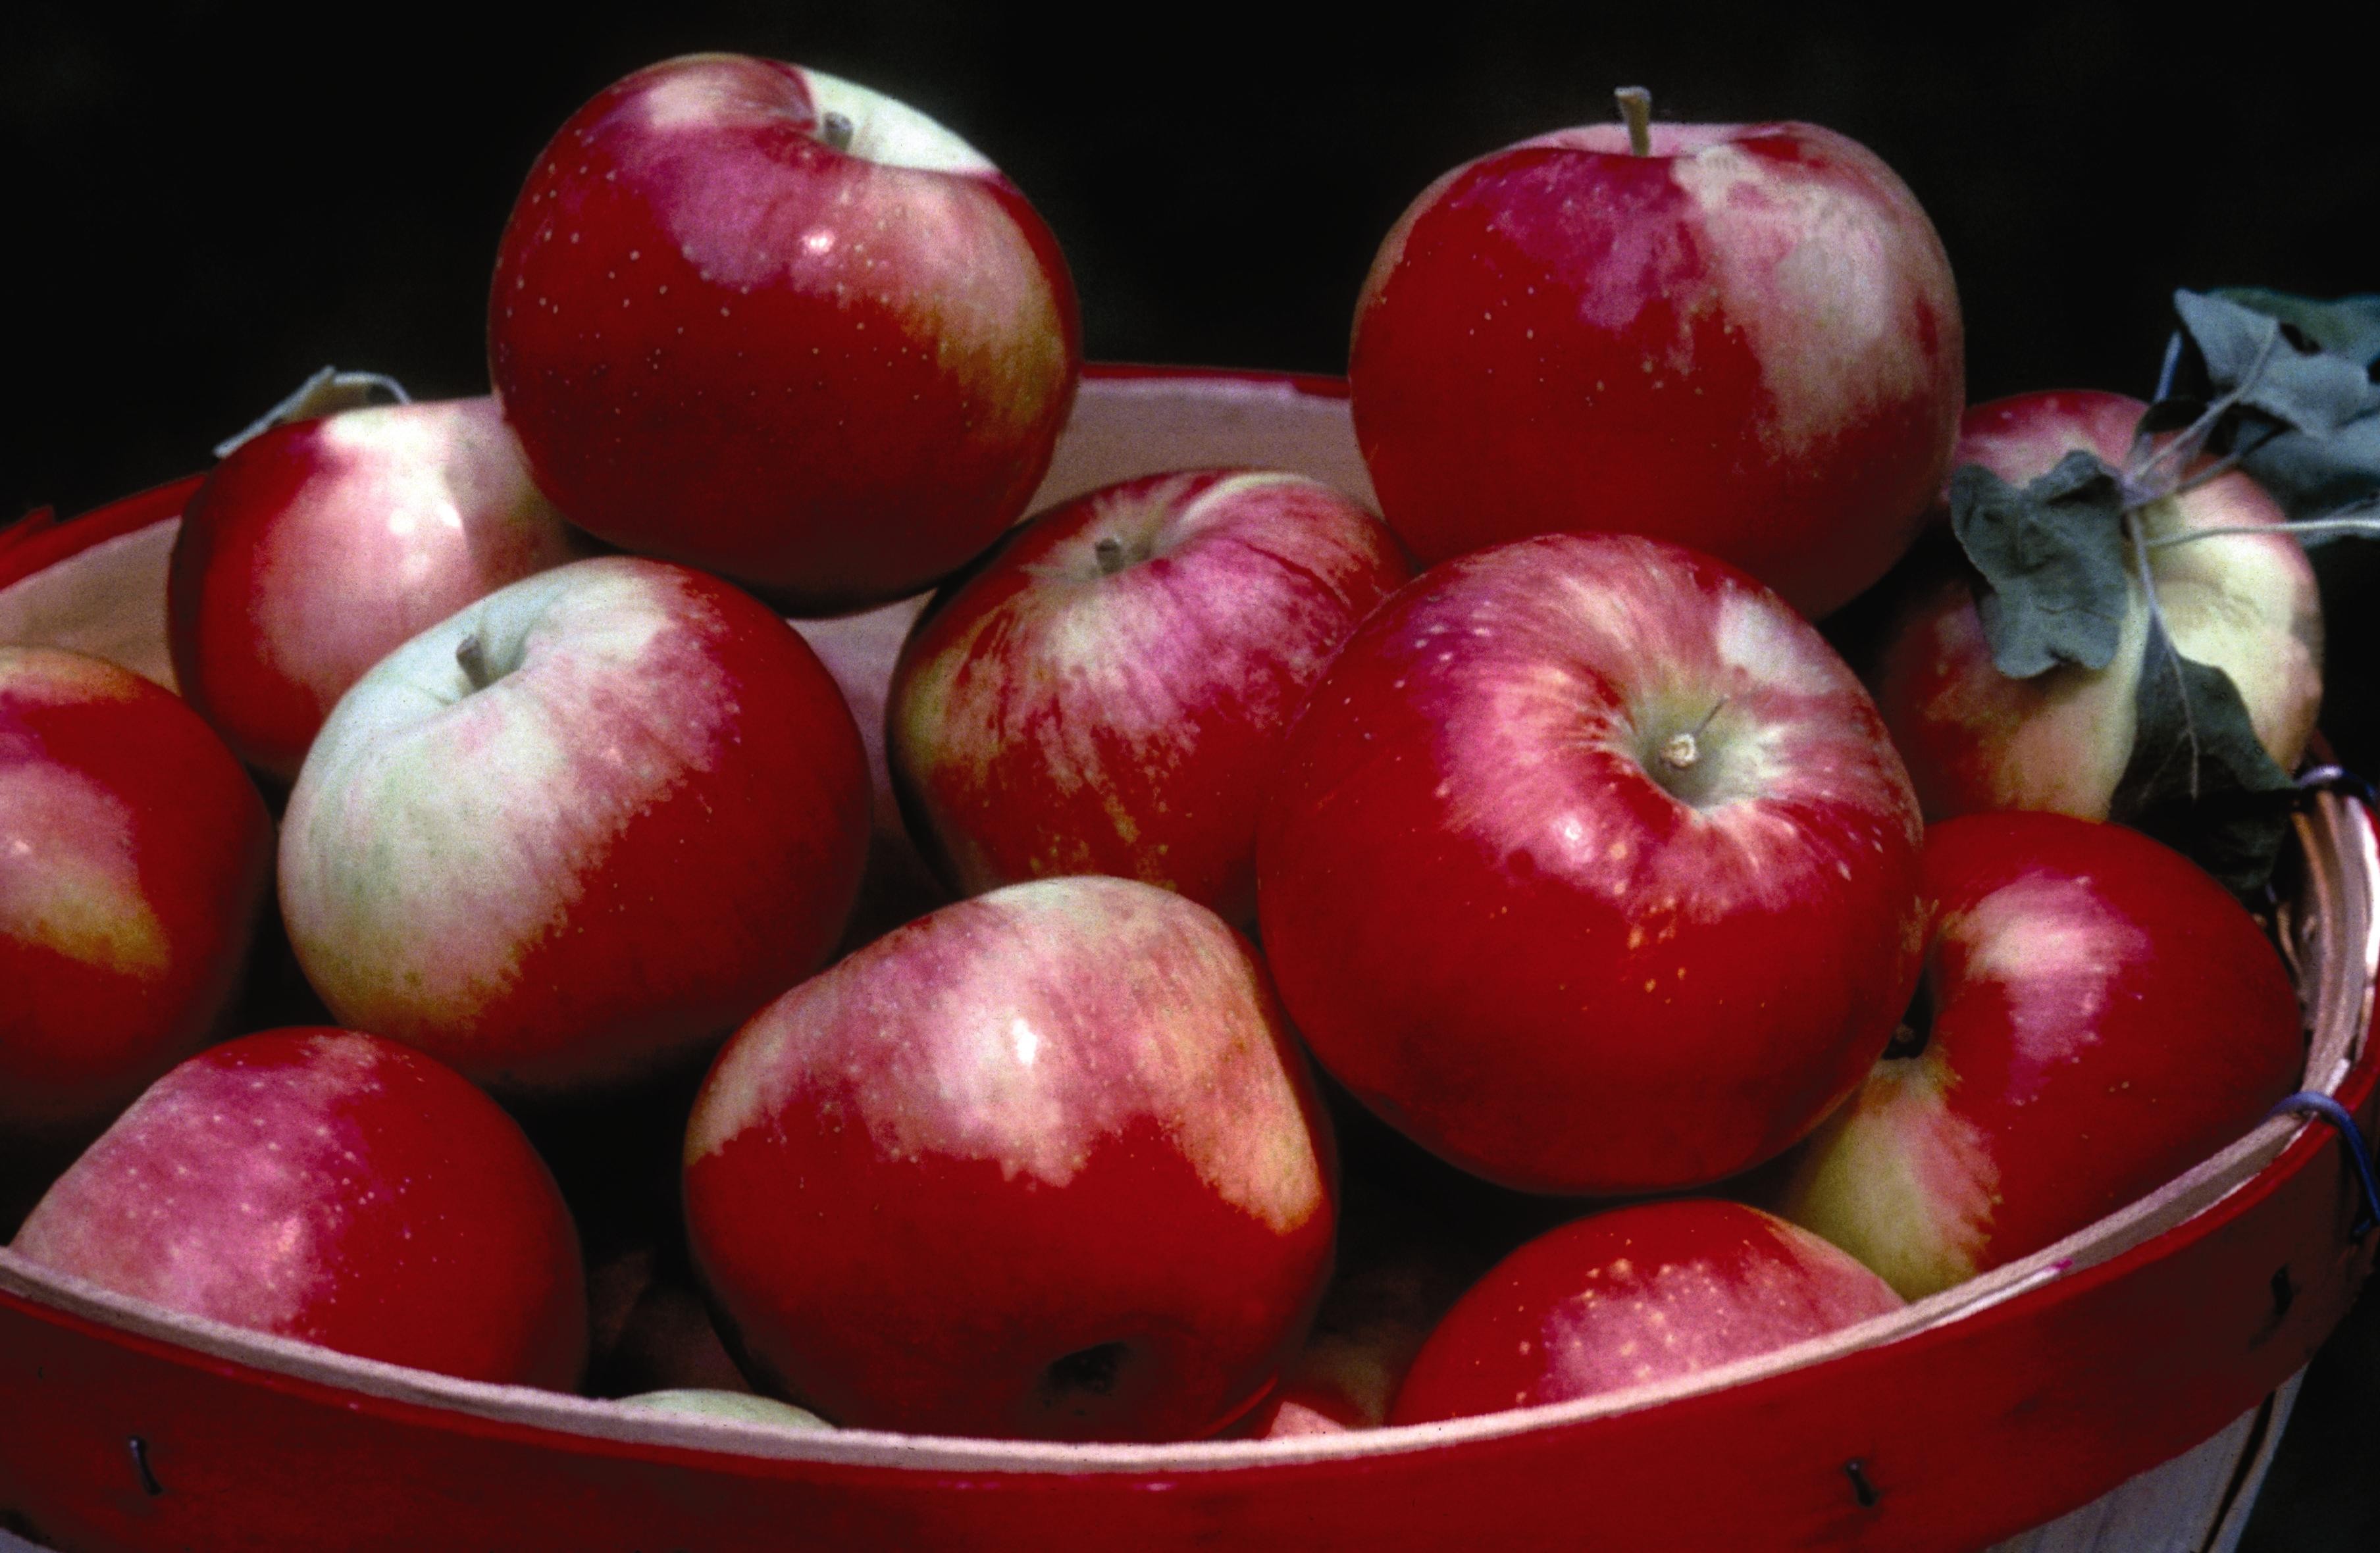 Apple oat bars made with Zestar apples